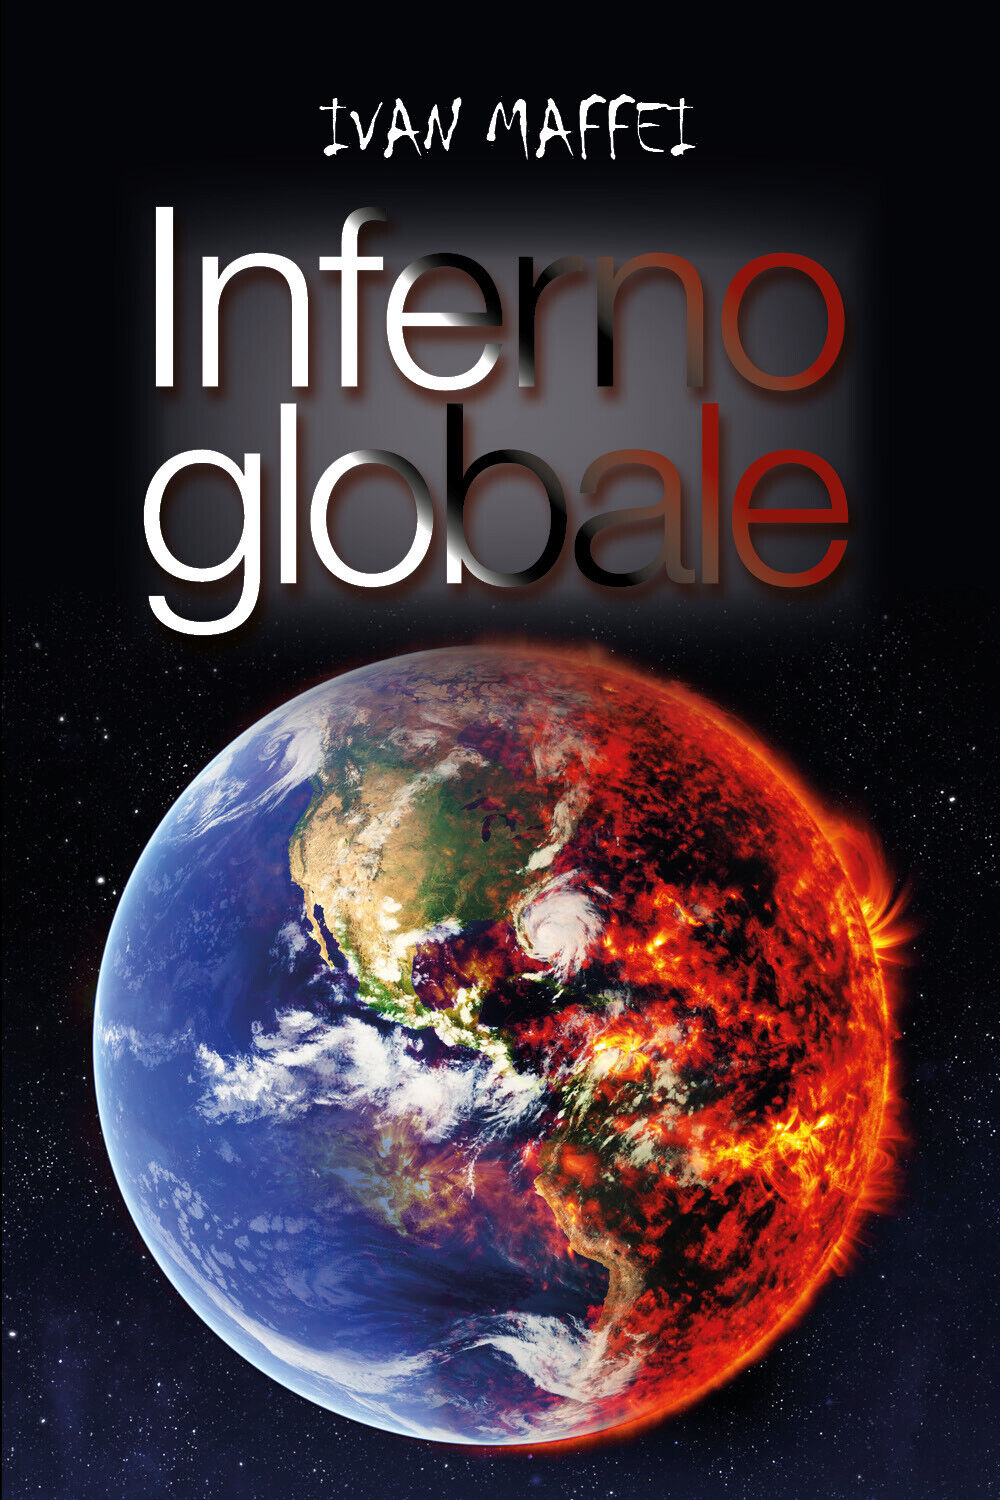 Inferno globale -  Ivan Maffei,  2017,  Youcanprint libro usato